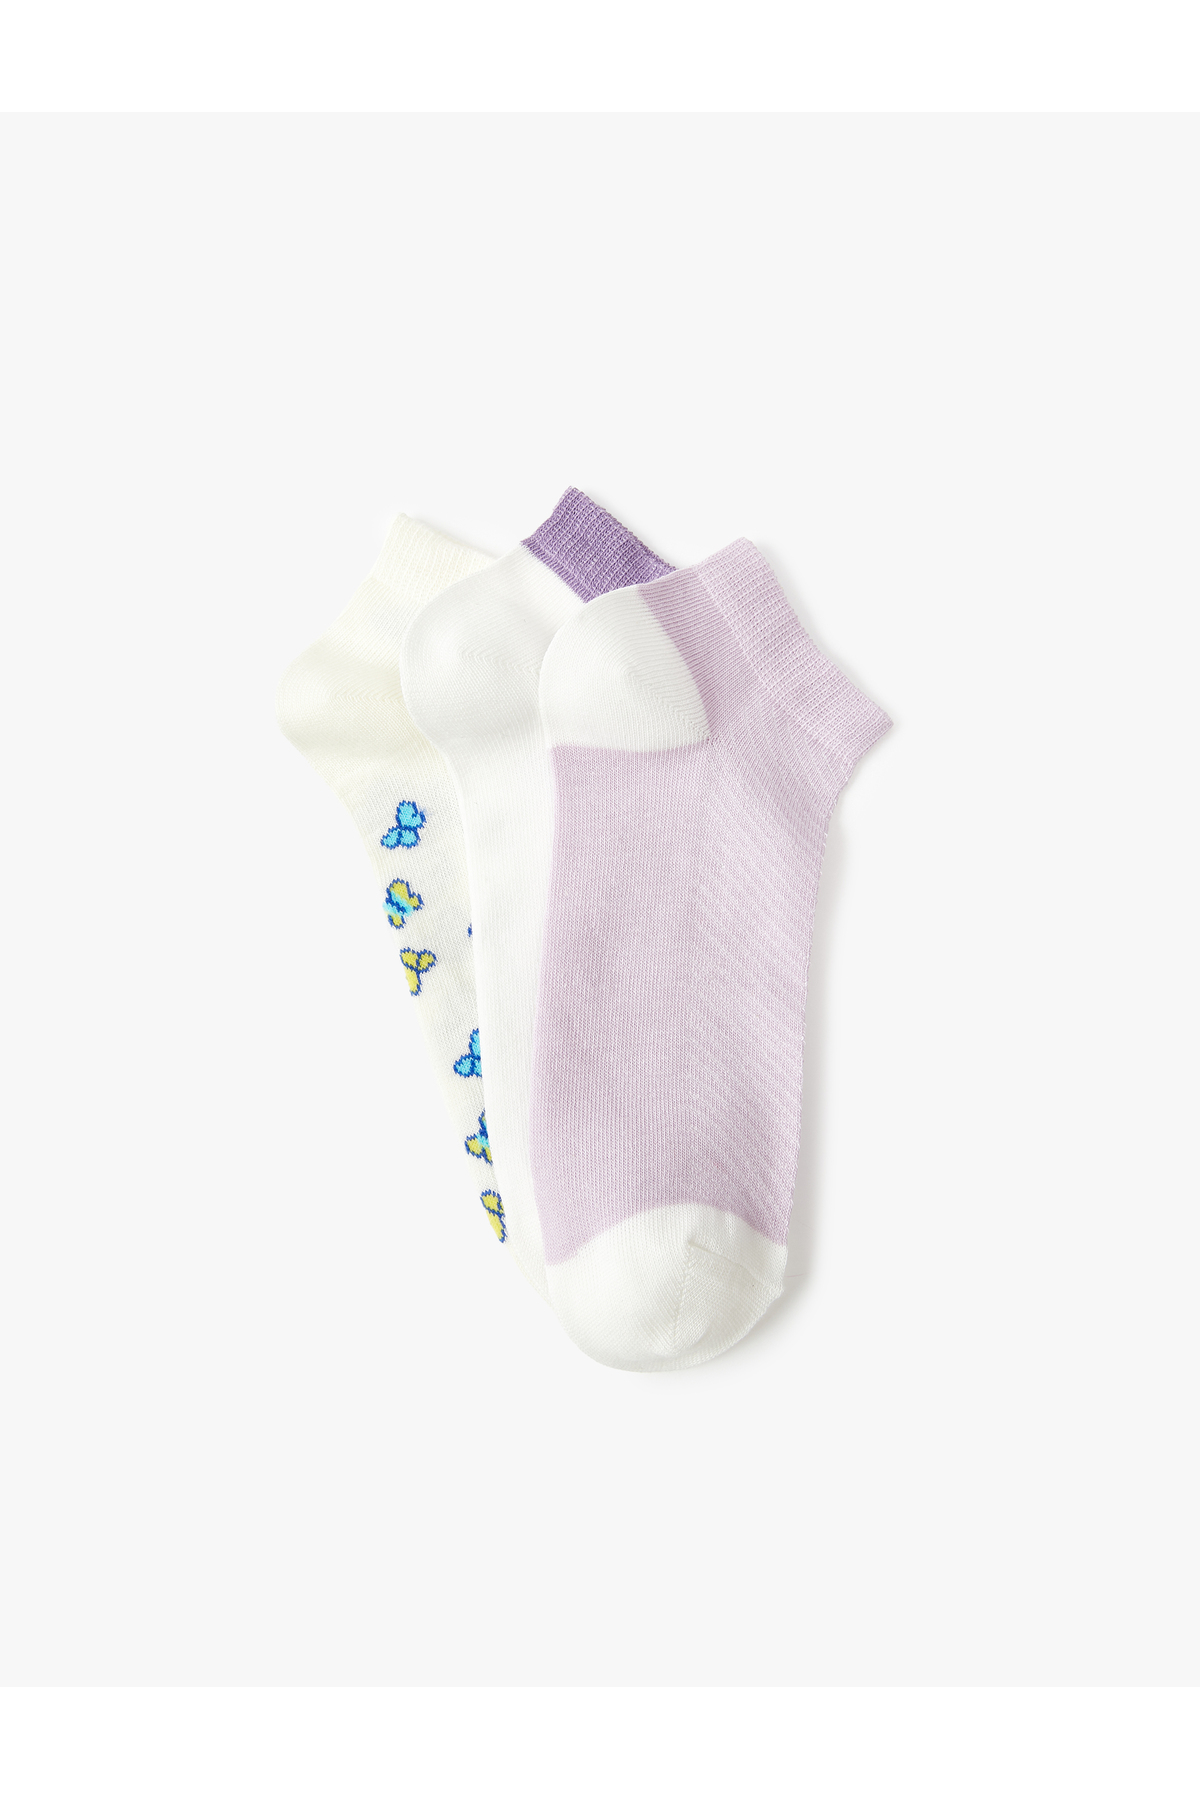 Koton 3-Piece Booties Socks Set Butterfly Patterned Multi Color